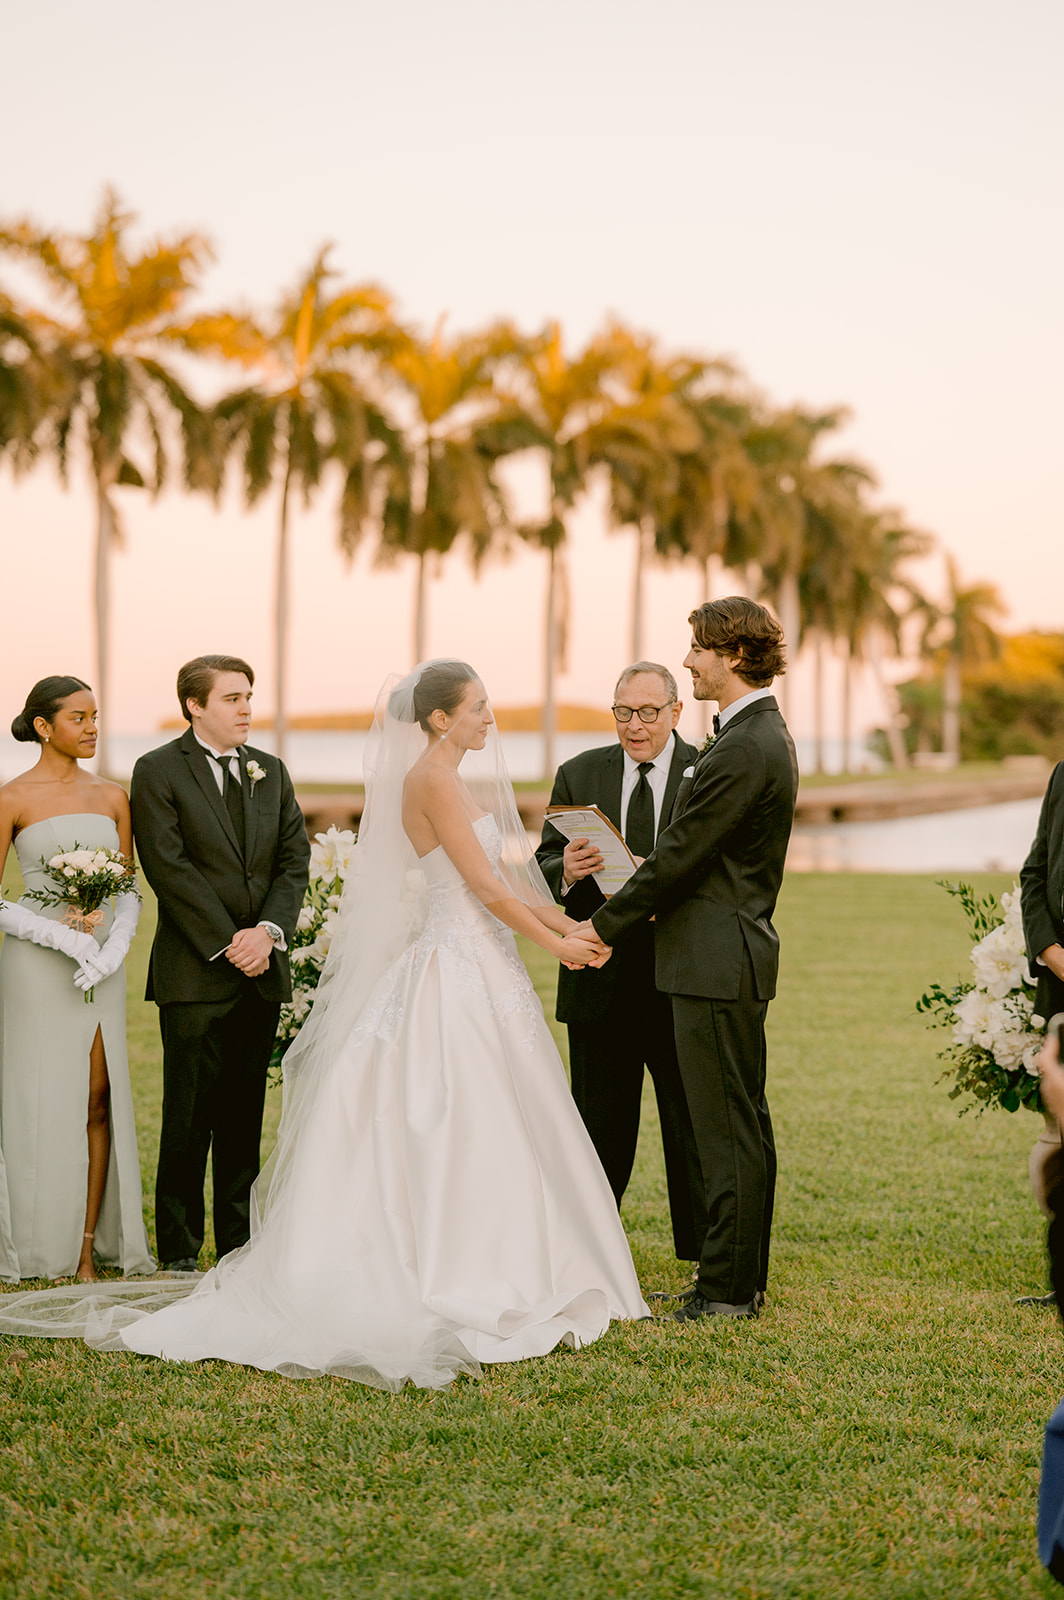 Capturing love at Deering Estate Wedding: Miami Florida Photographers
